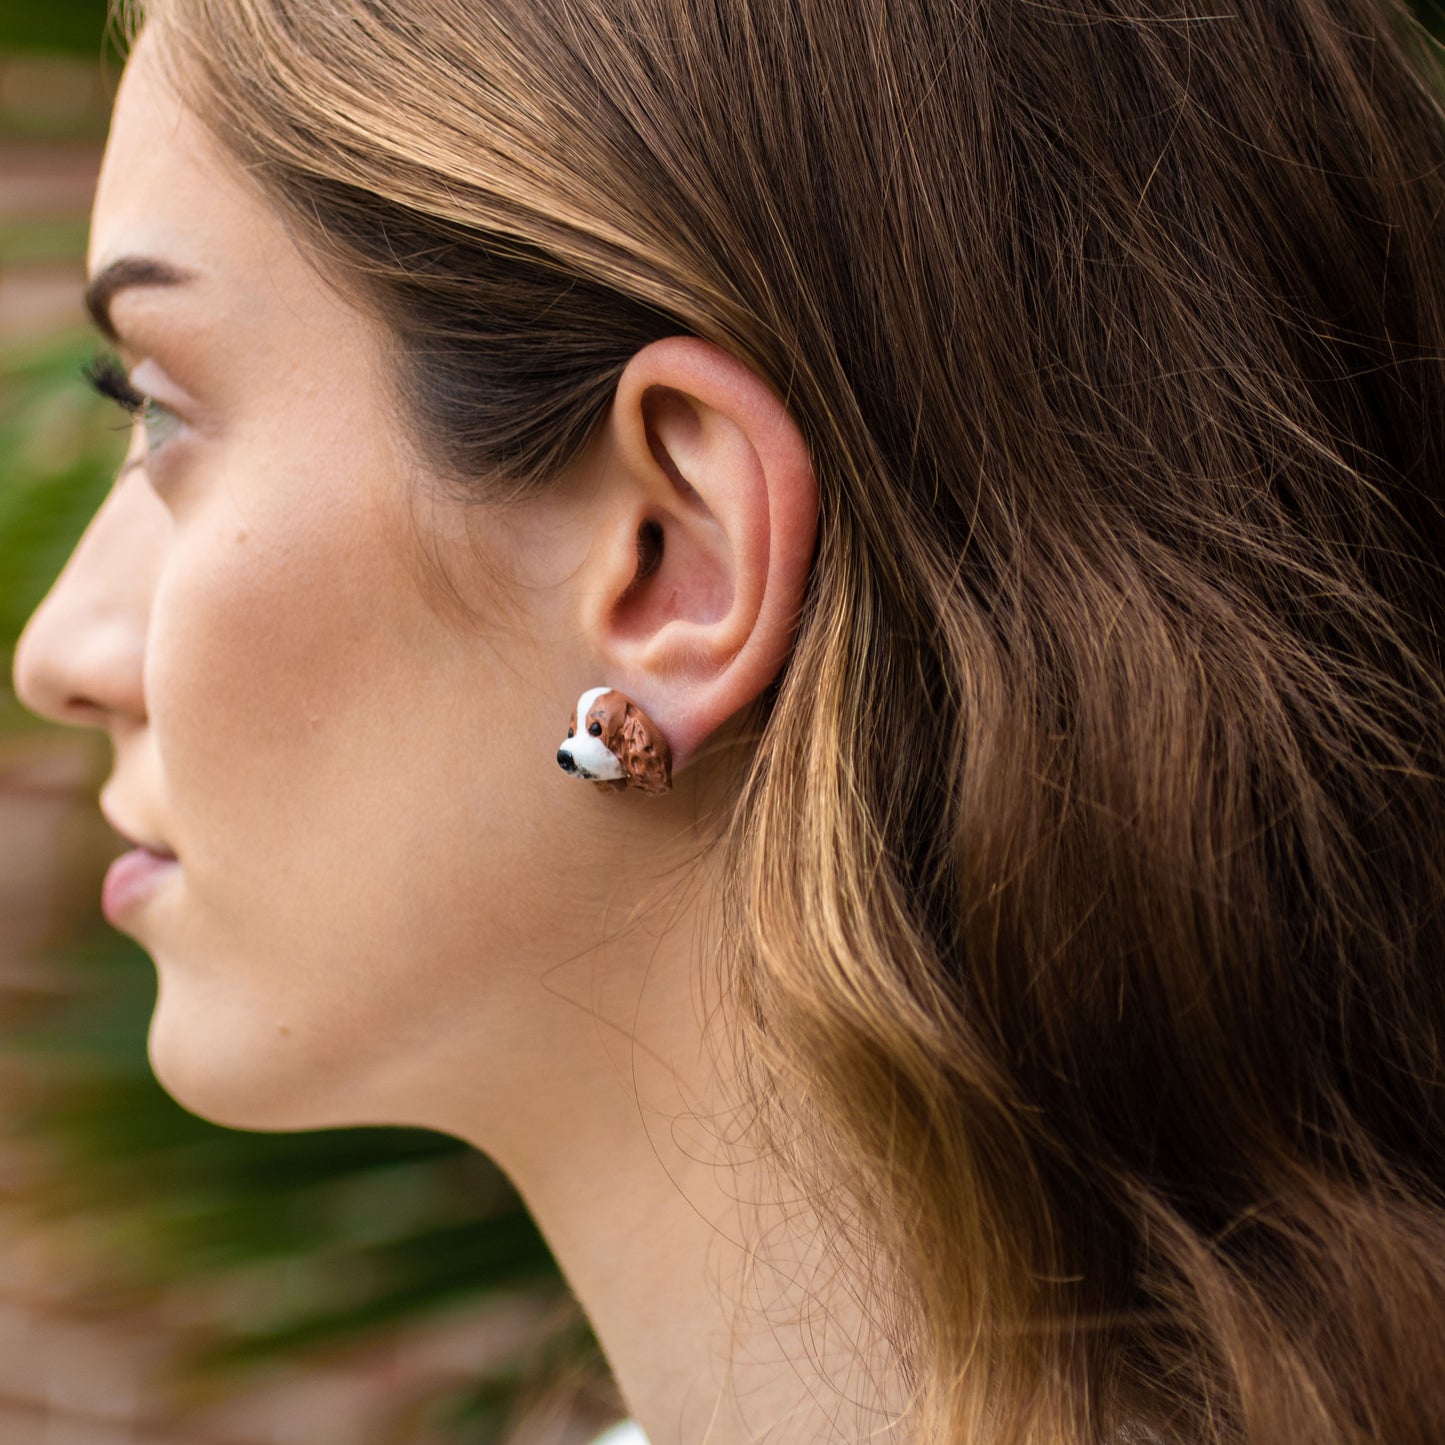 Handmade polymer clay cavalier king charles spaniel stud earrings shown on model's ear